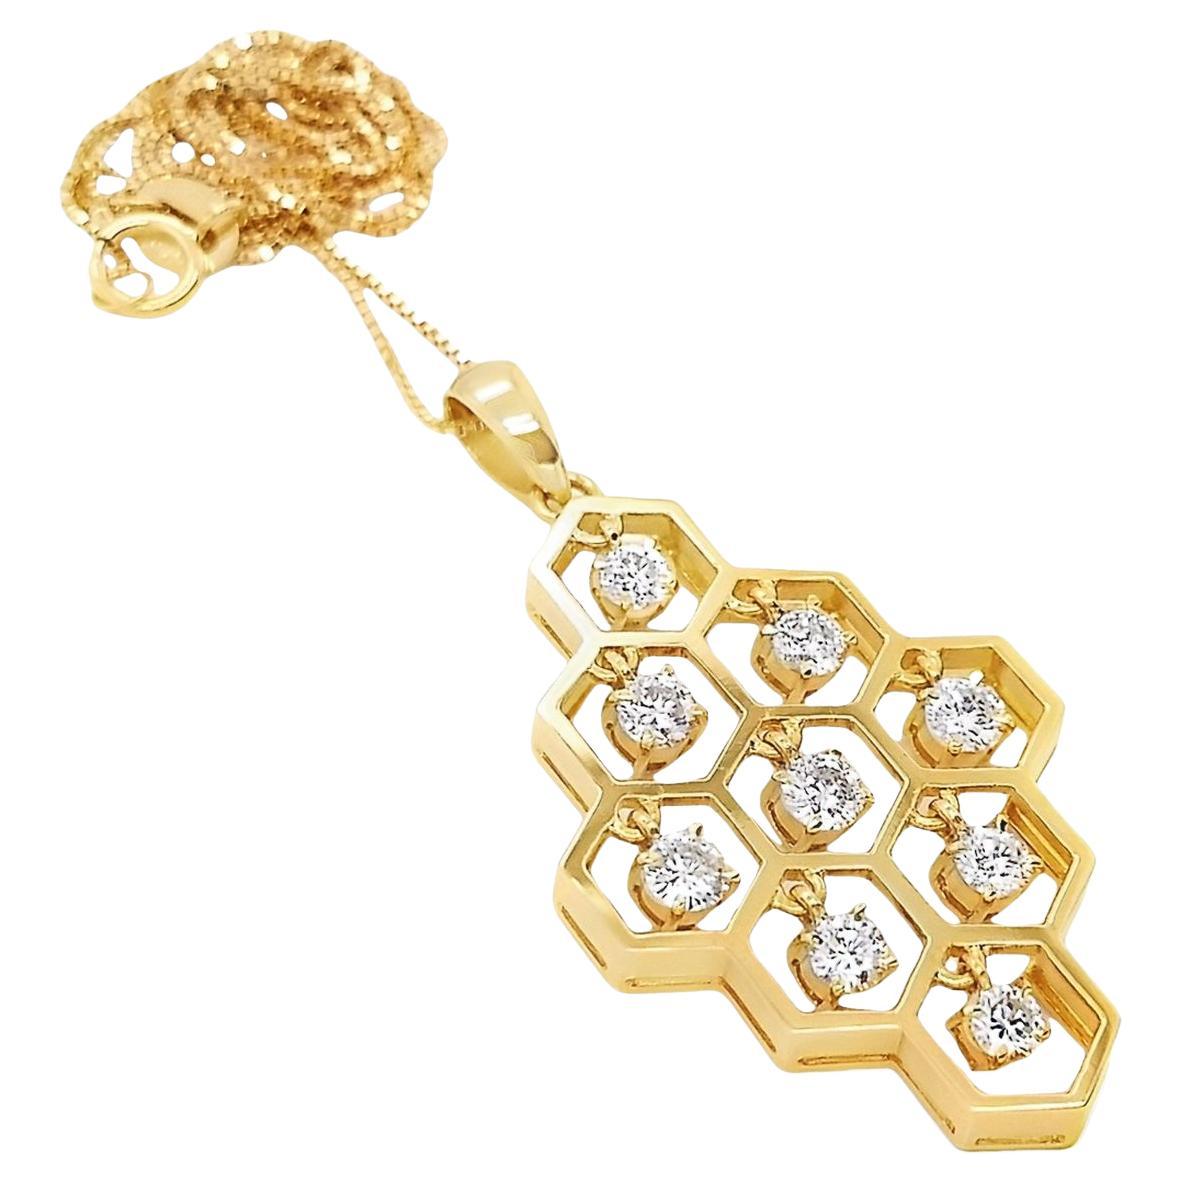 IGI Certified 1.02ct Natural Diamonds 18K Yellow Gold Pendant Necklace